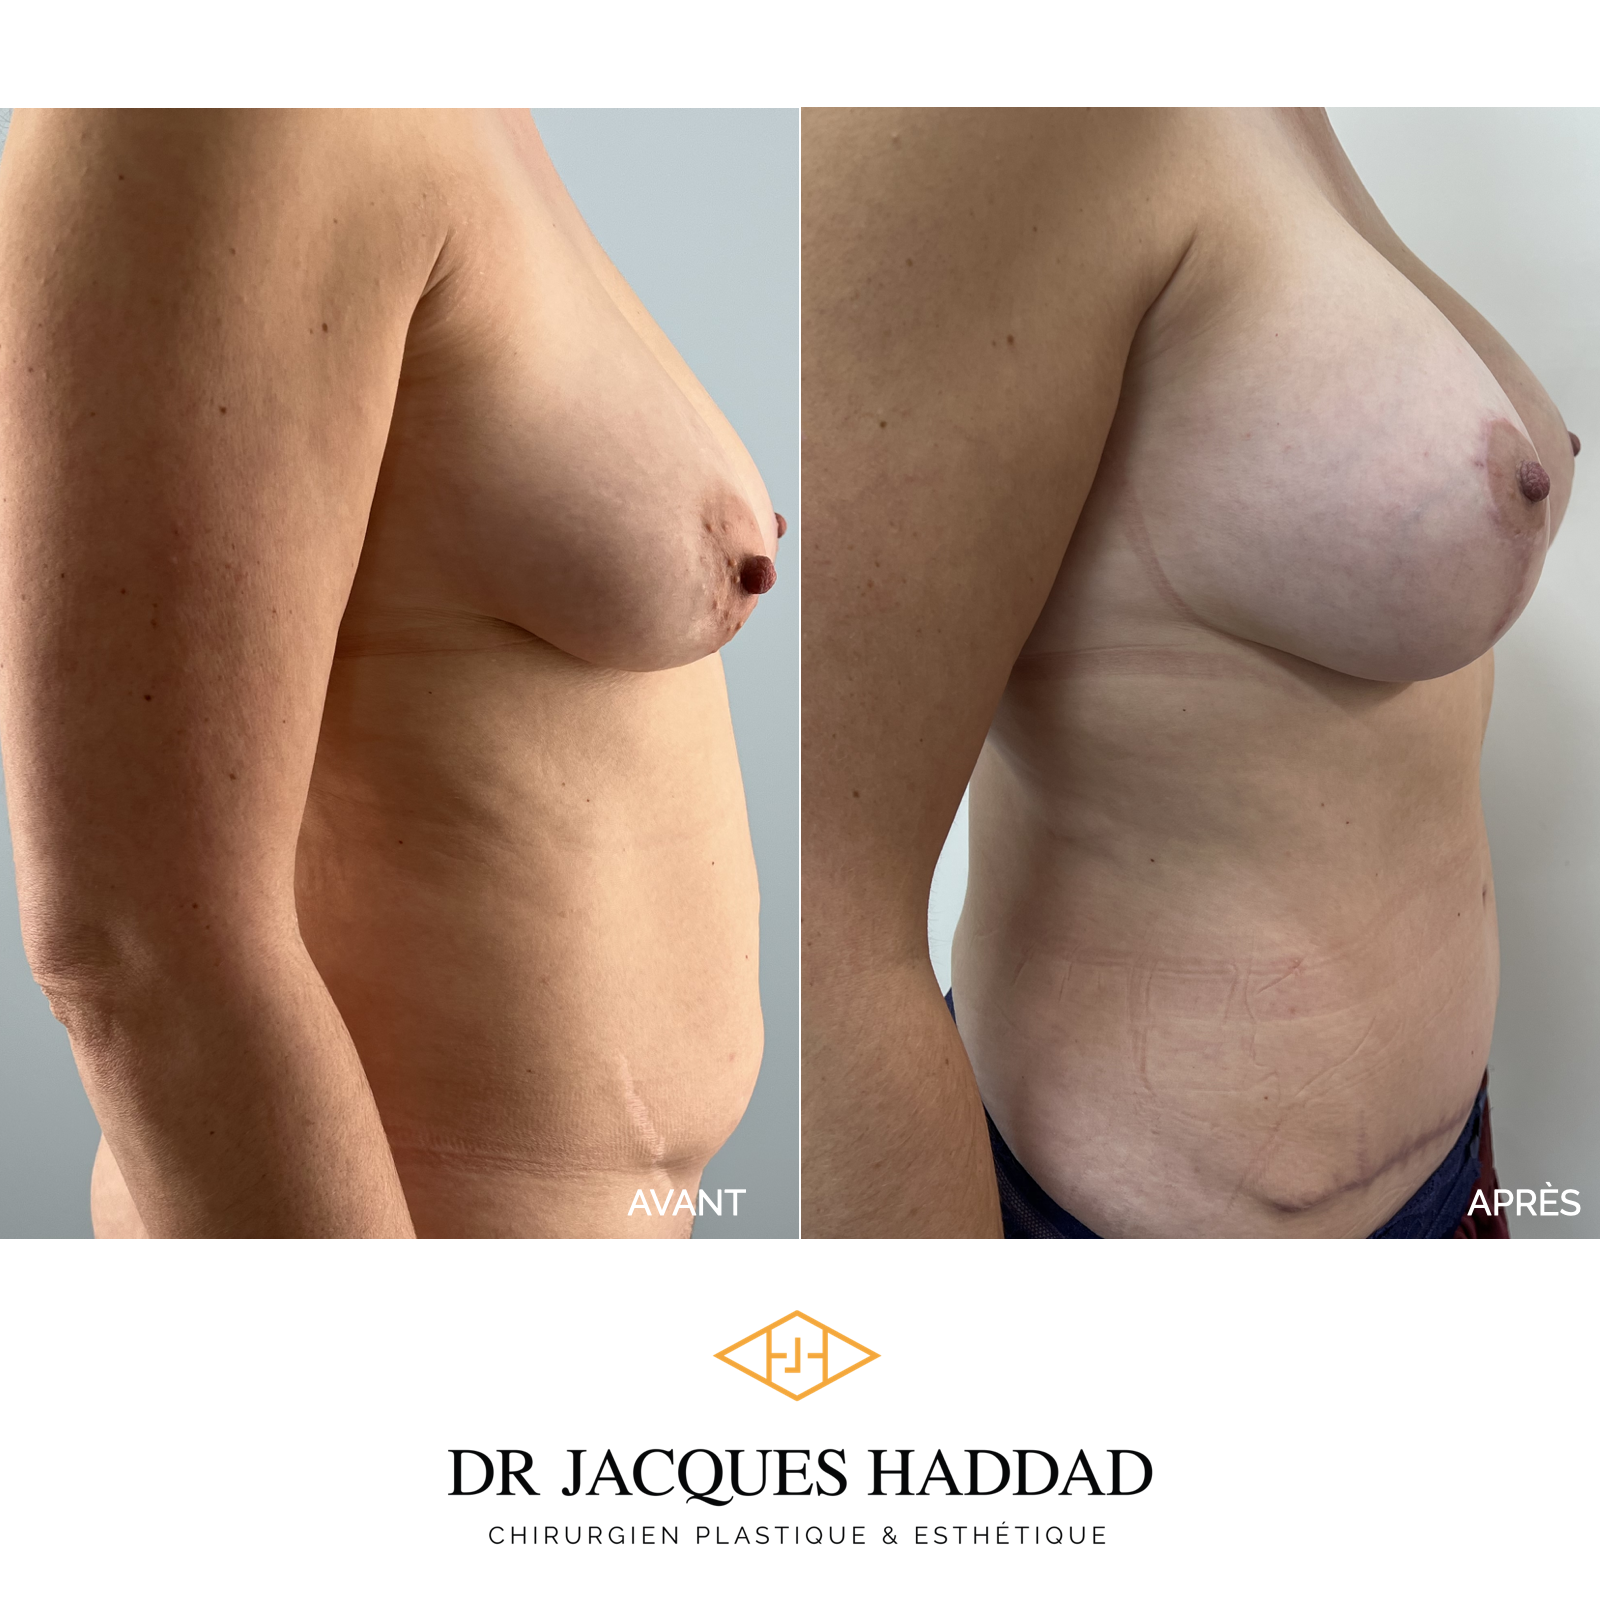 Breast augmentation - Dr Jacques Haddad